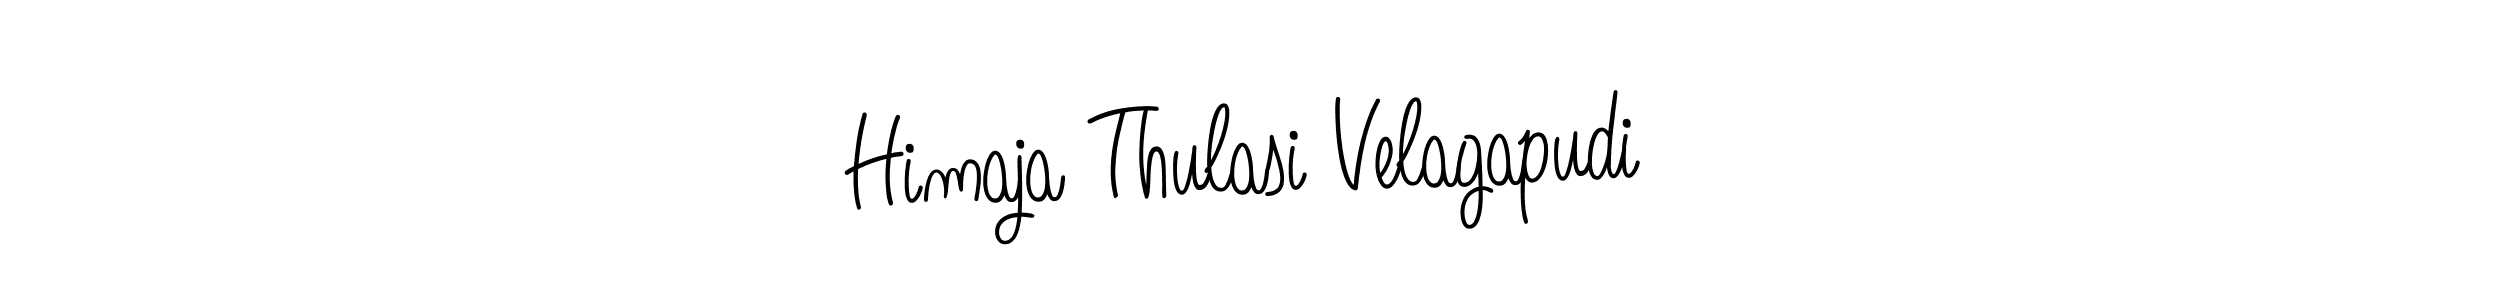 Best and Professional Signature Style for Himaja Thulasi Velagapudi. Angelique-Rose-font-FFP Best Signature Style Collection. Himaja Thulasi Velagapudi signature style 5 images and pictures png